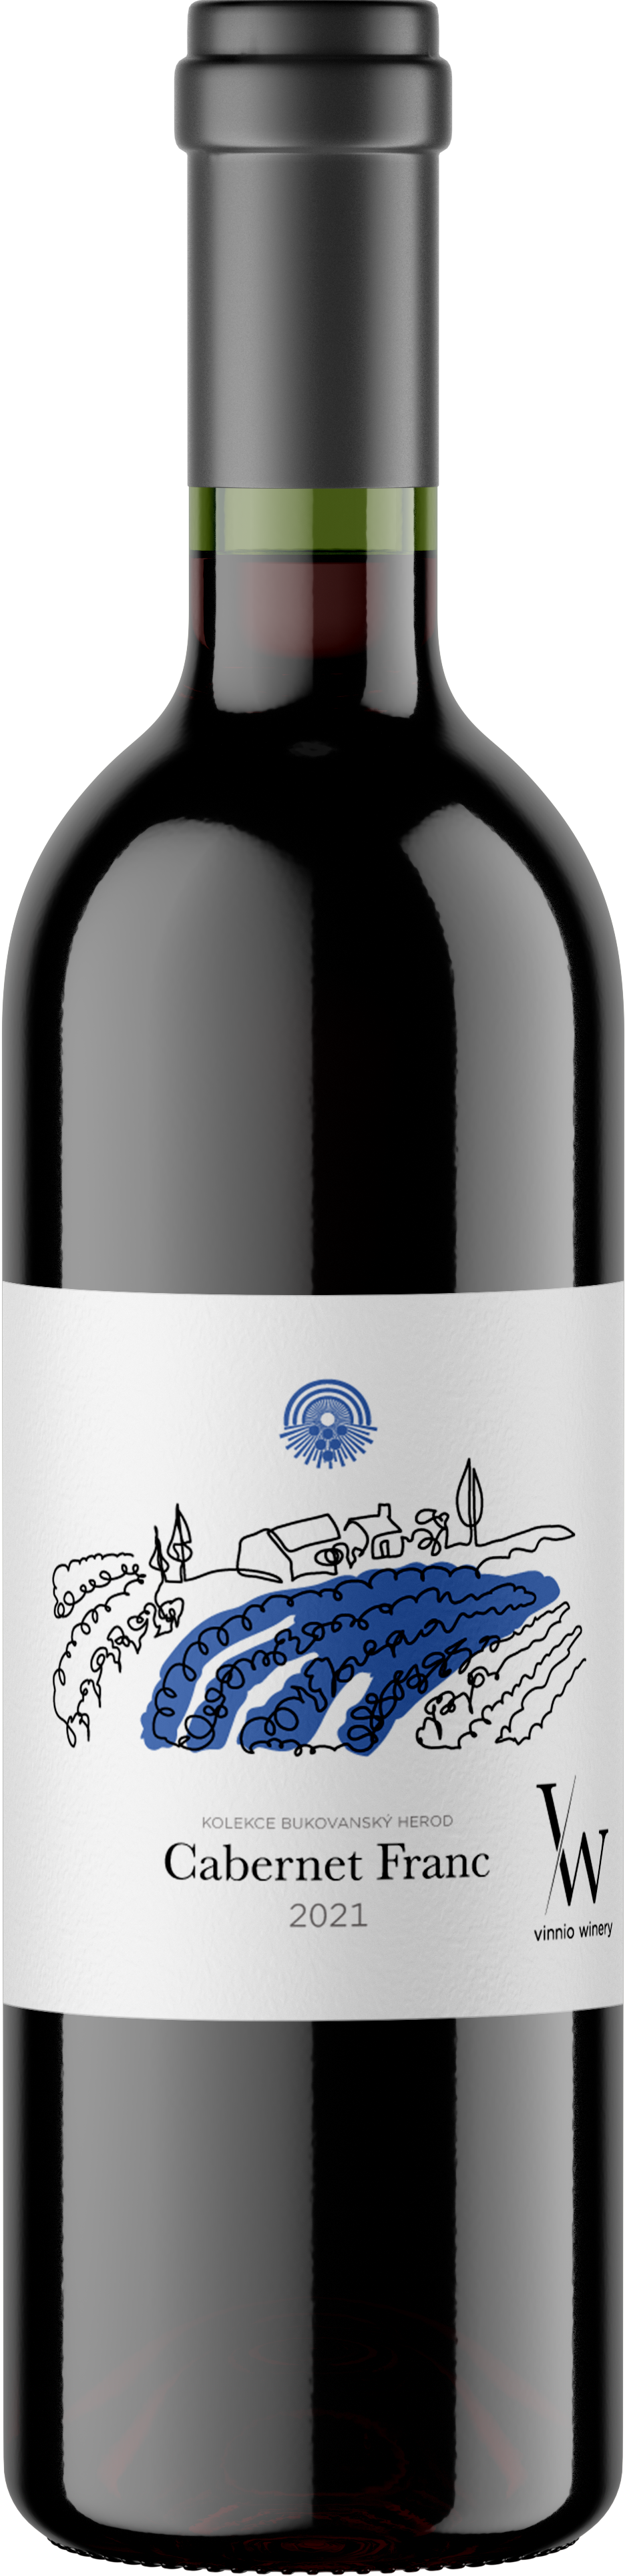 Vinnio Winery - Cabernet Franc 2021